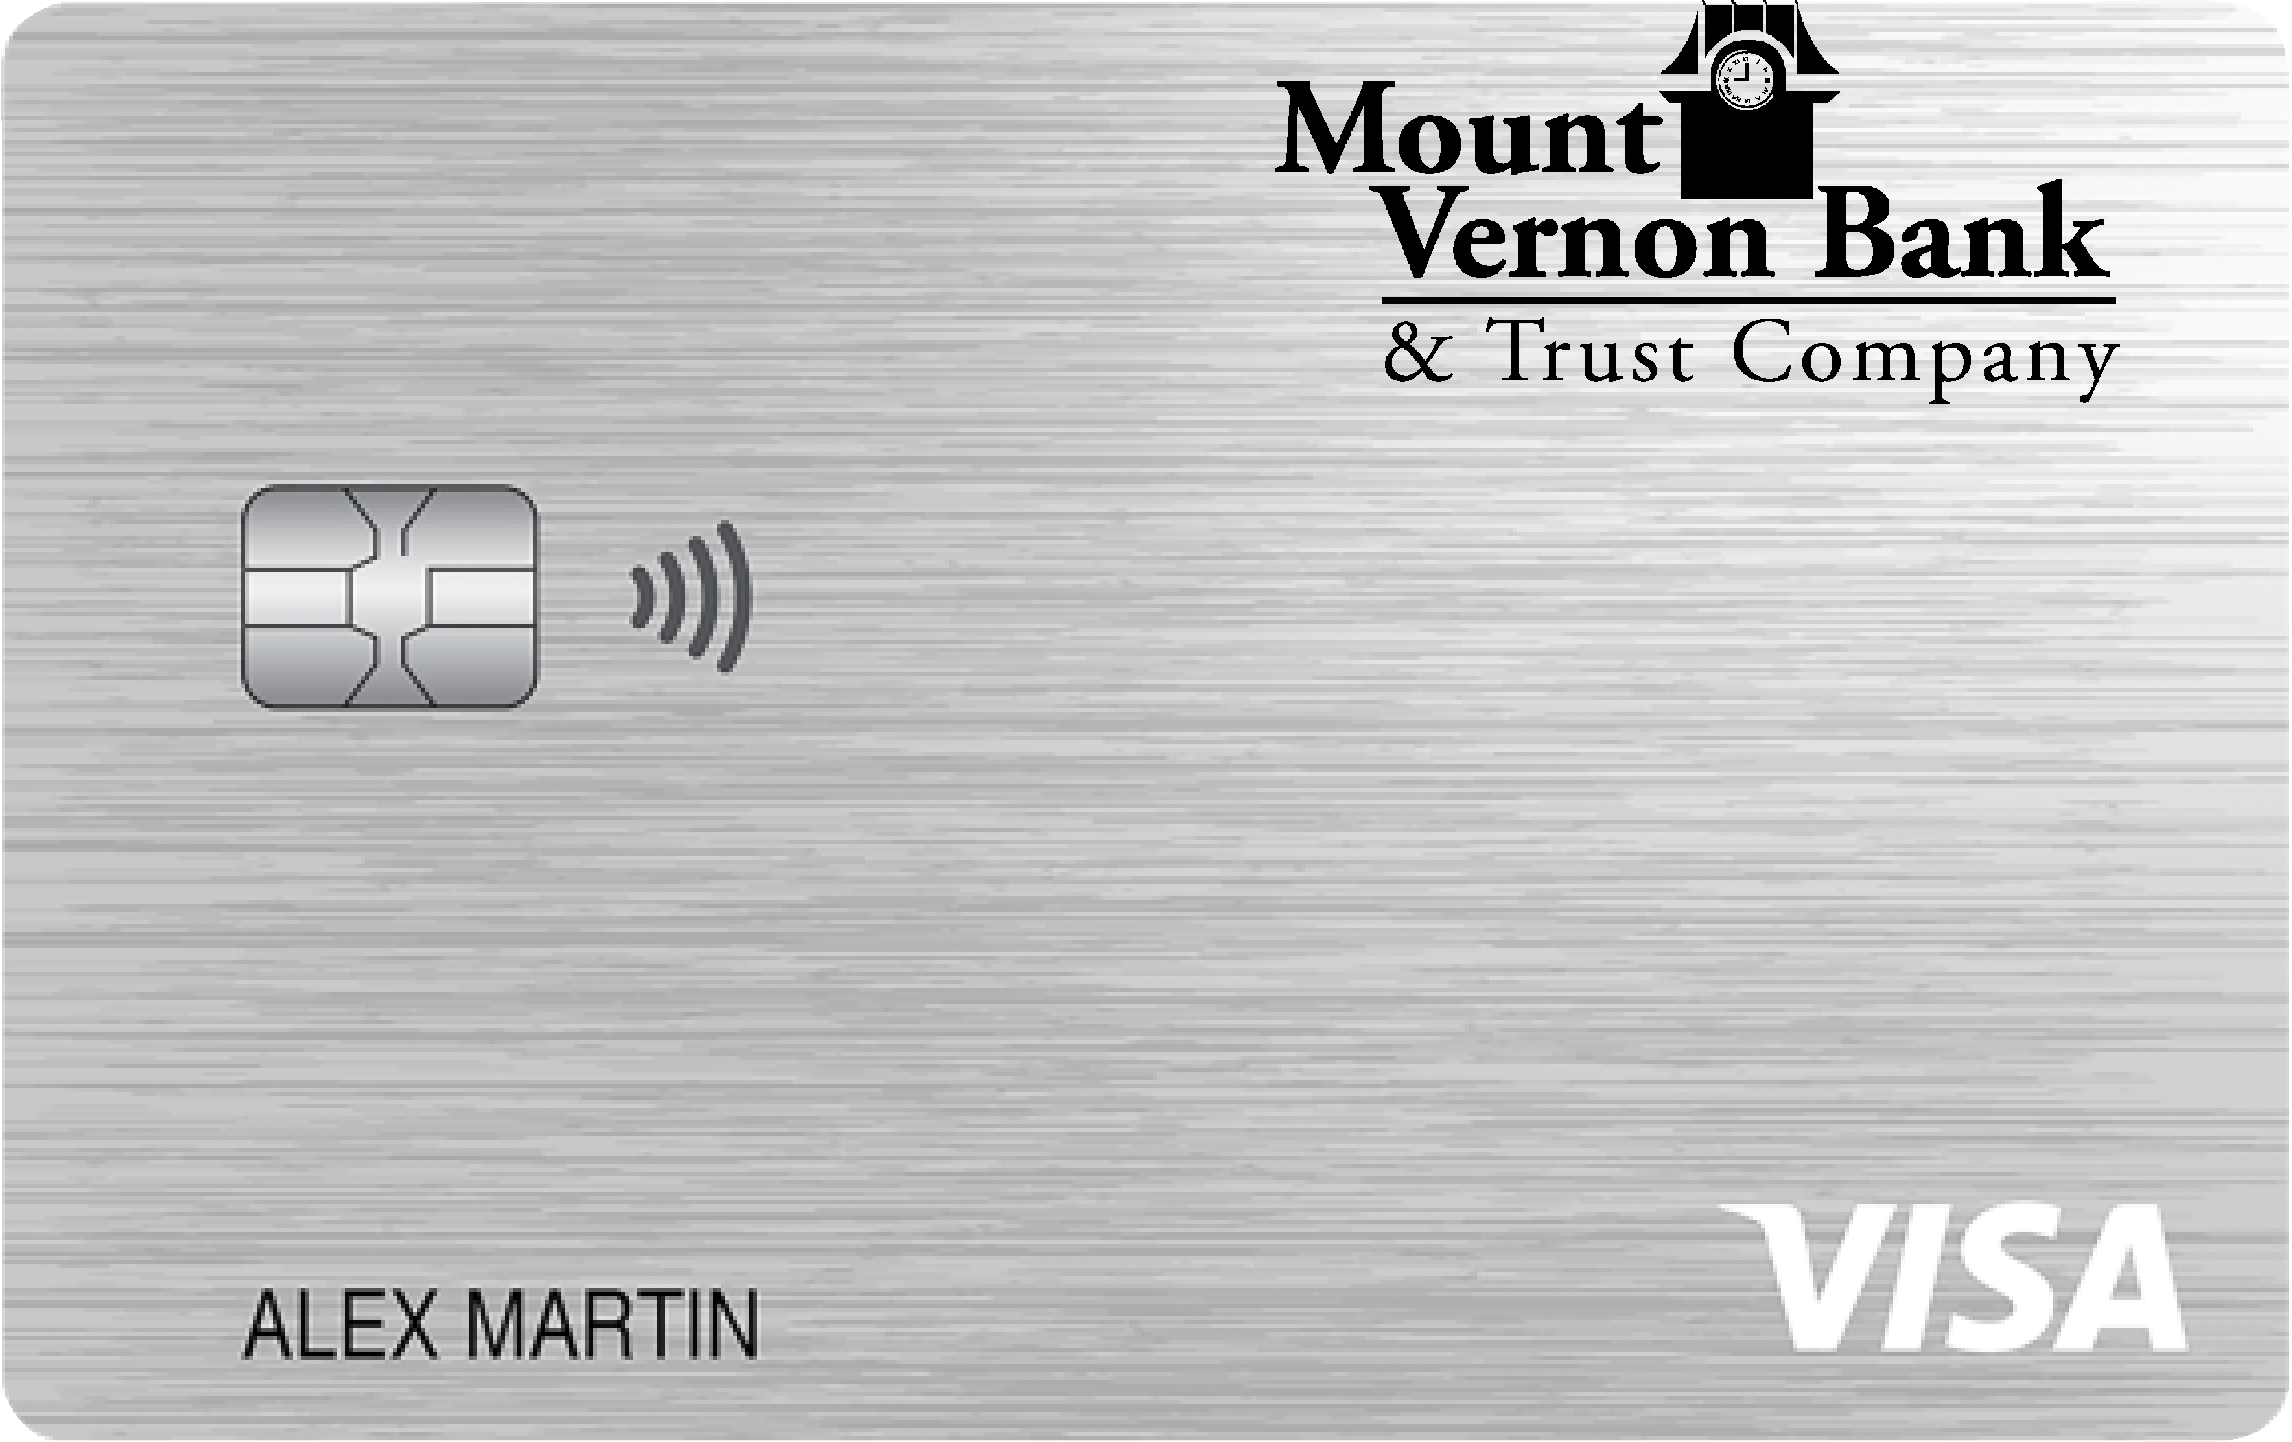 Mount Vernon Bank & Trust